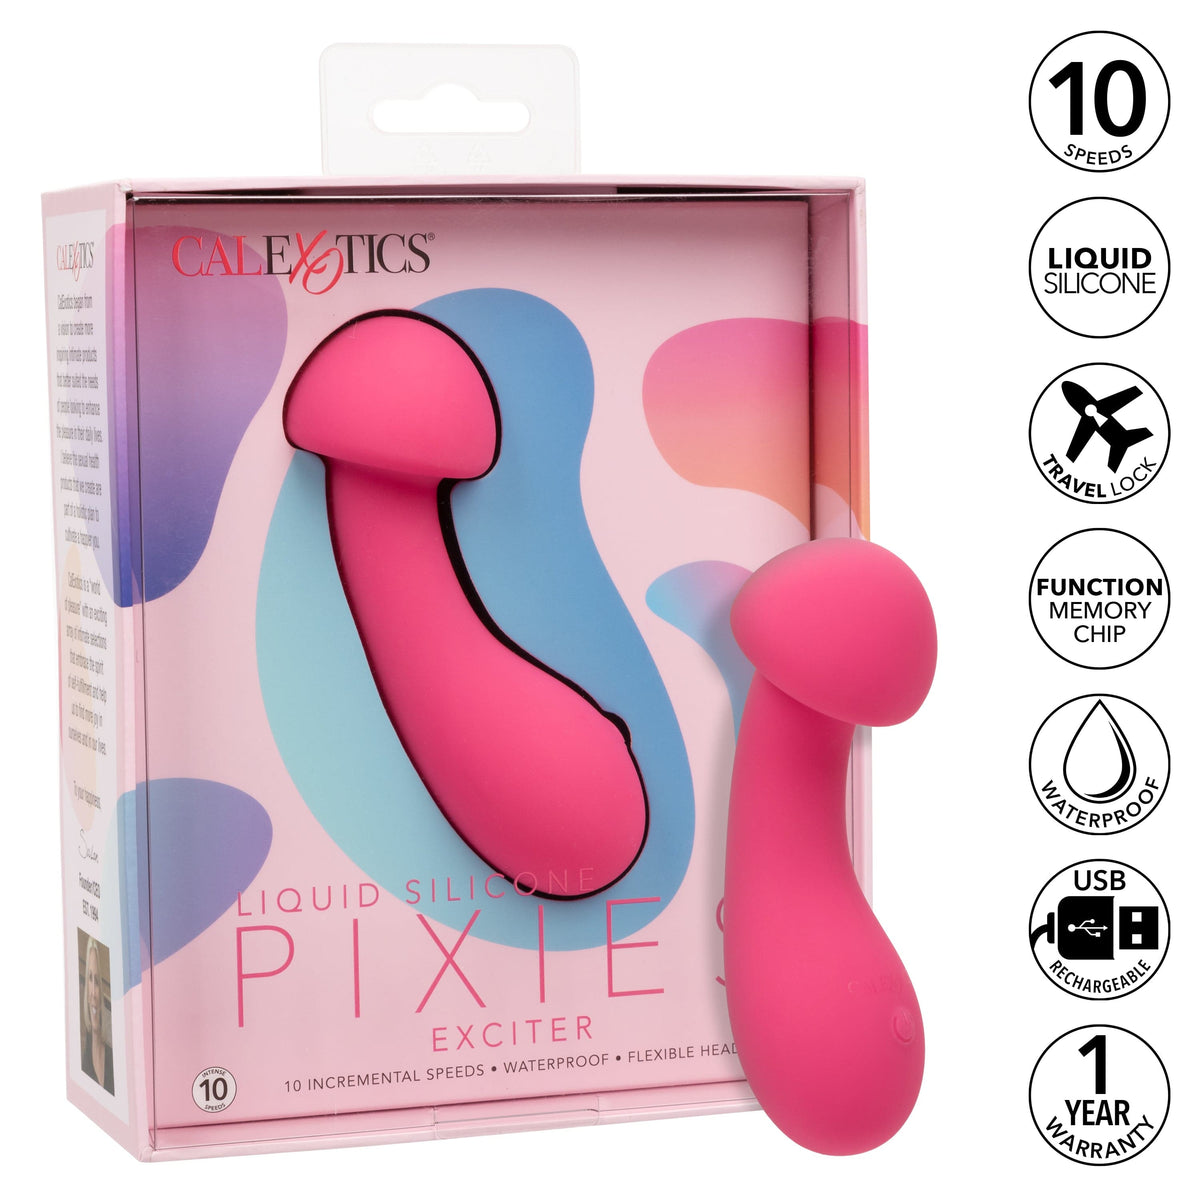 California Exotics - Liquid Silicone Pixies Exciter Clit Massager (Pink) CE1998 CherryAffairs